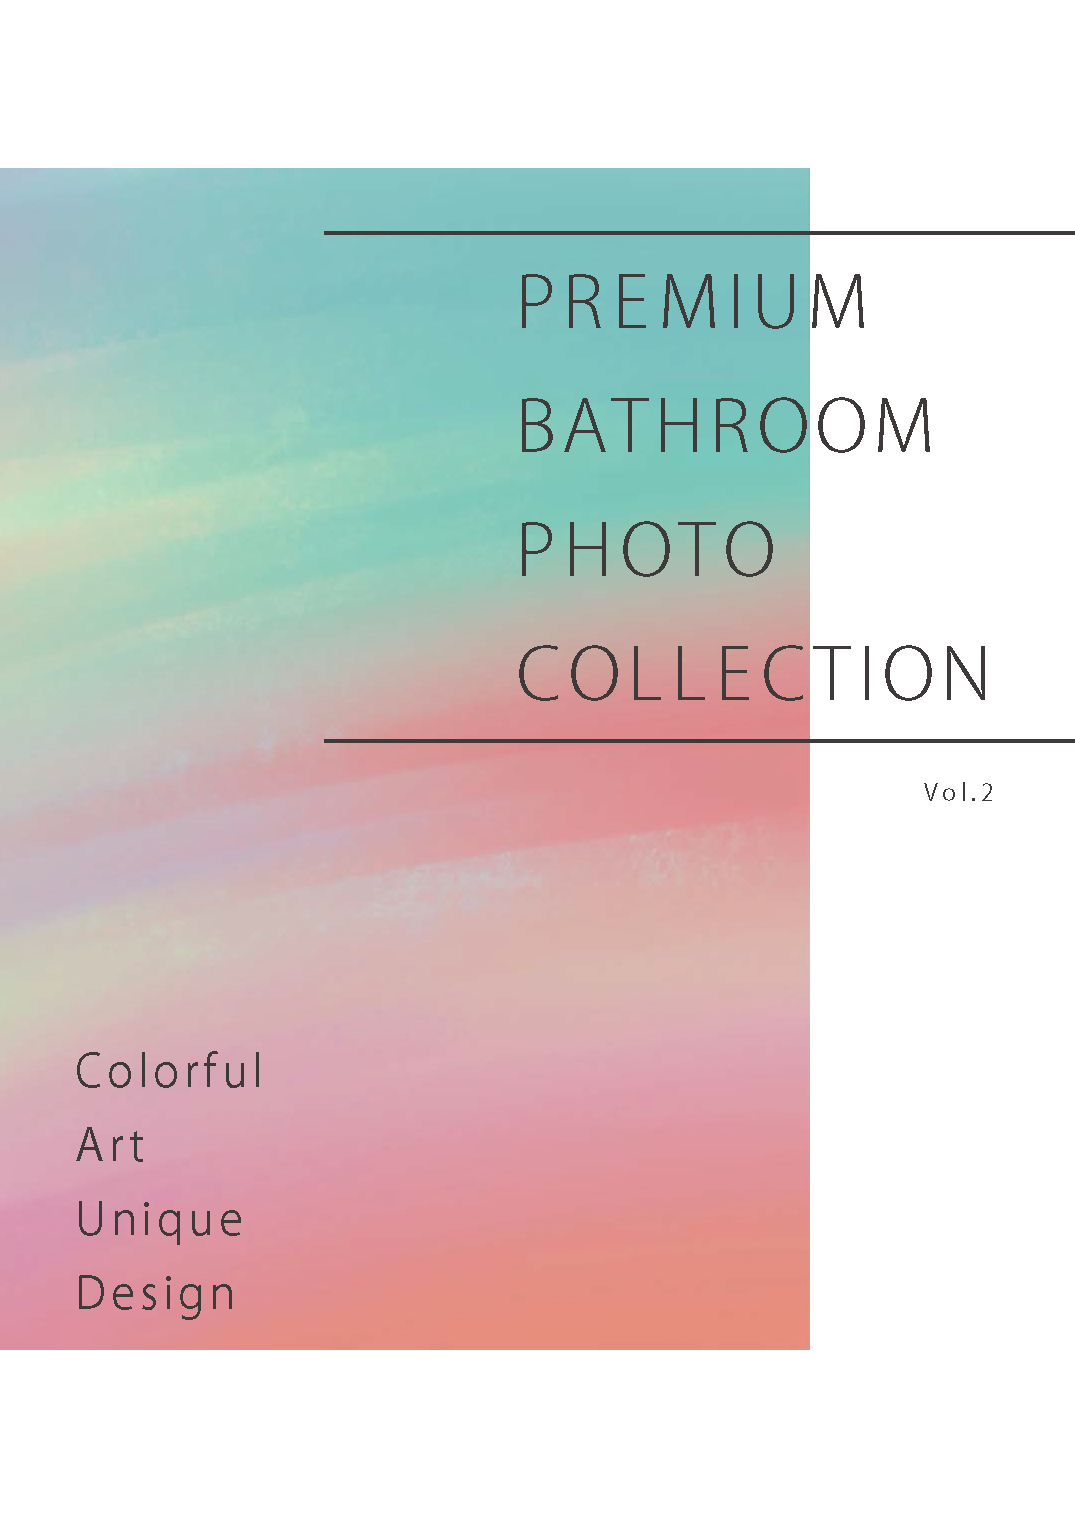 Premium Bathroom Photo Collection Vol.2